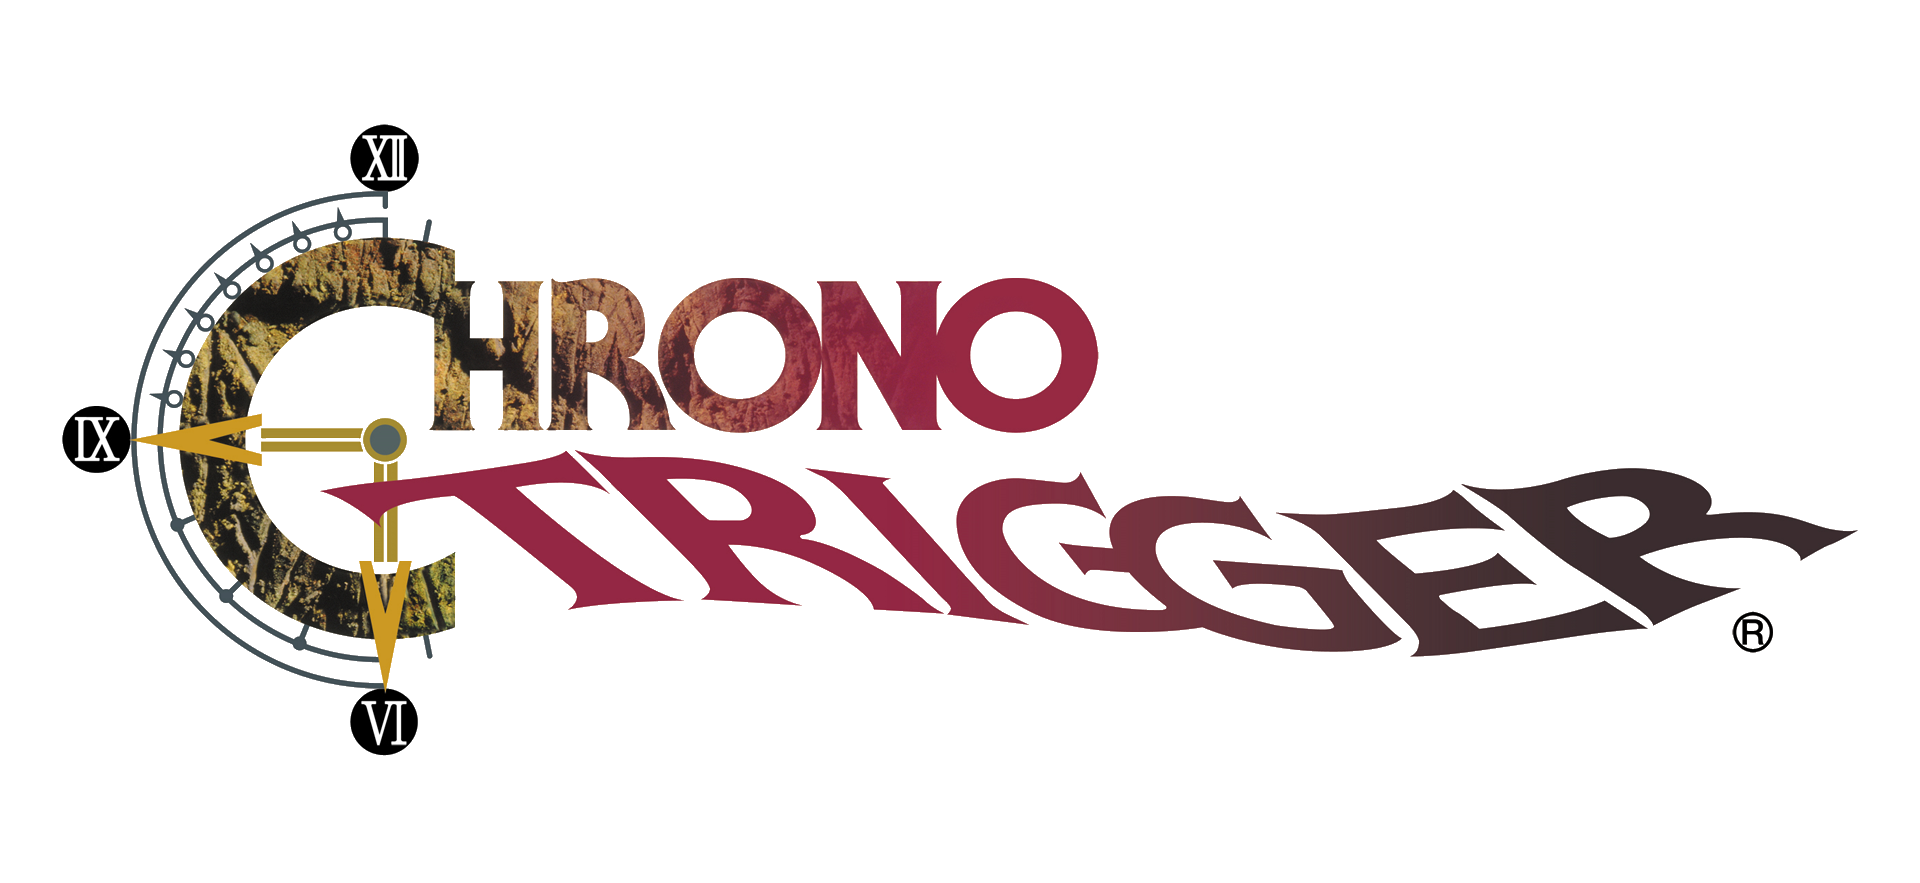 Chrono Trigger PNG - 172894